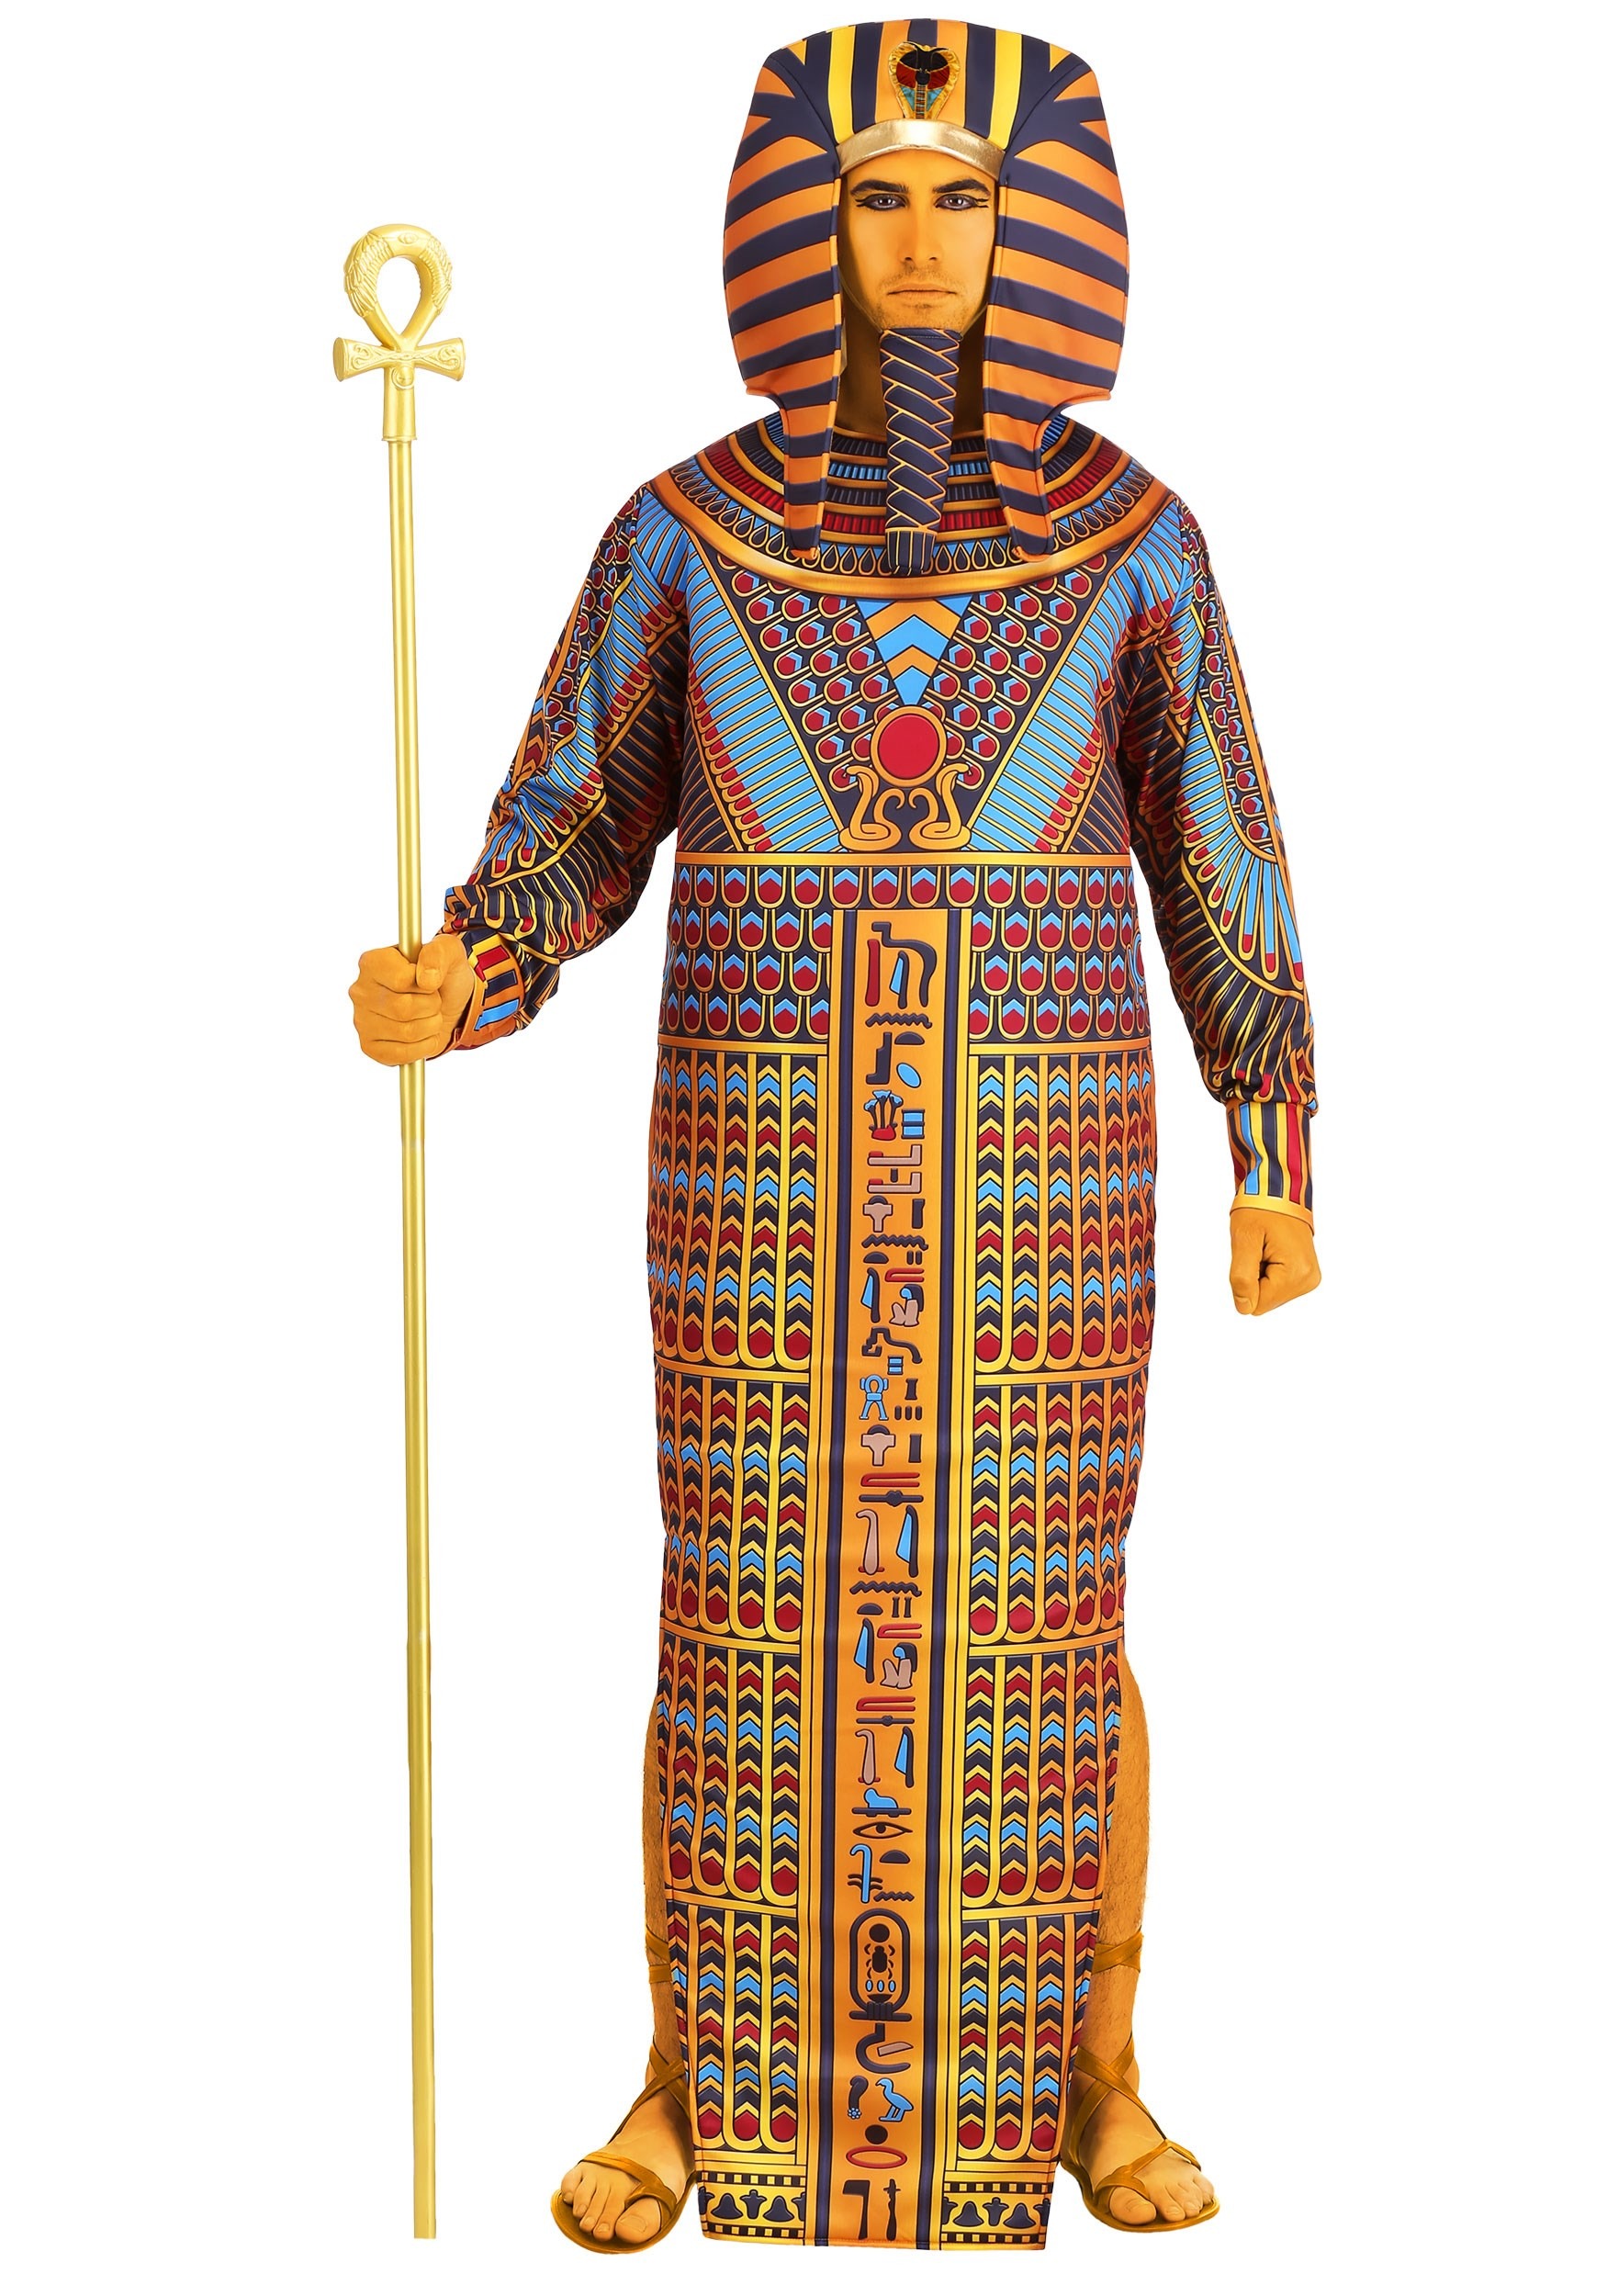 Adult King Tut Sarcophagus Costume